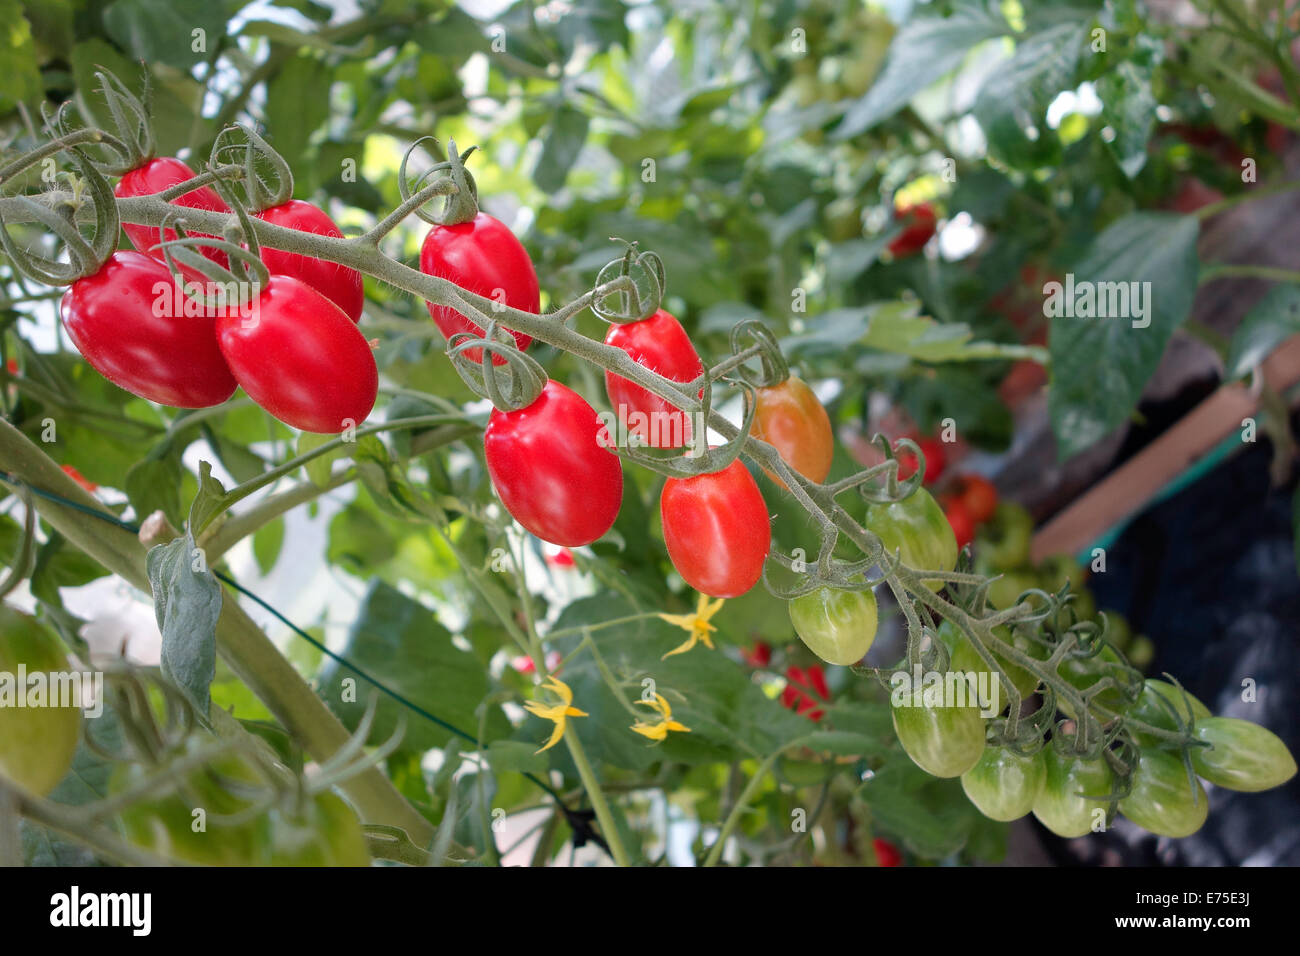 Ripening cluster of plum tomatoes. Solanum lycopersicum pruniforme Stock Photo